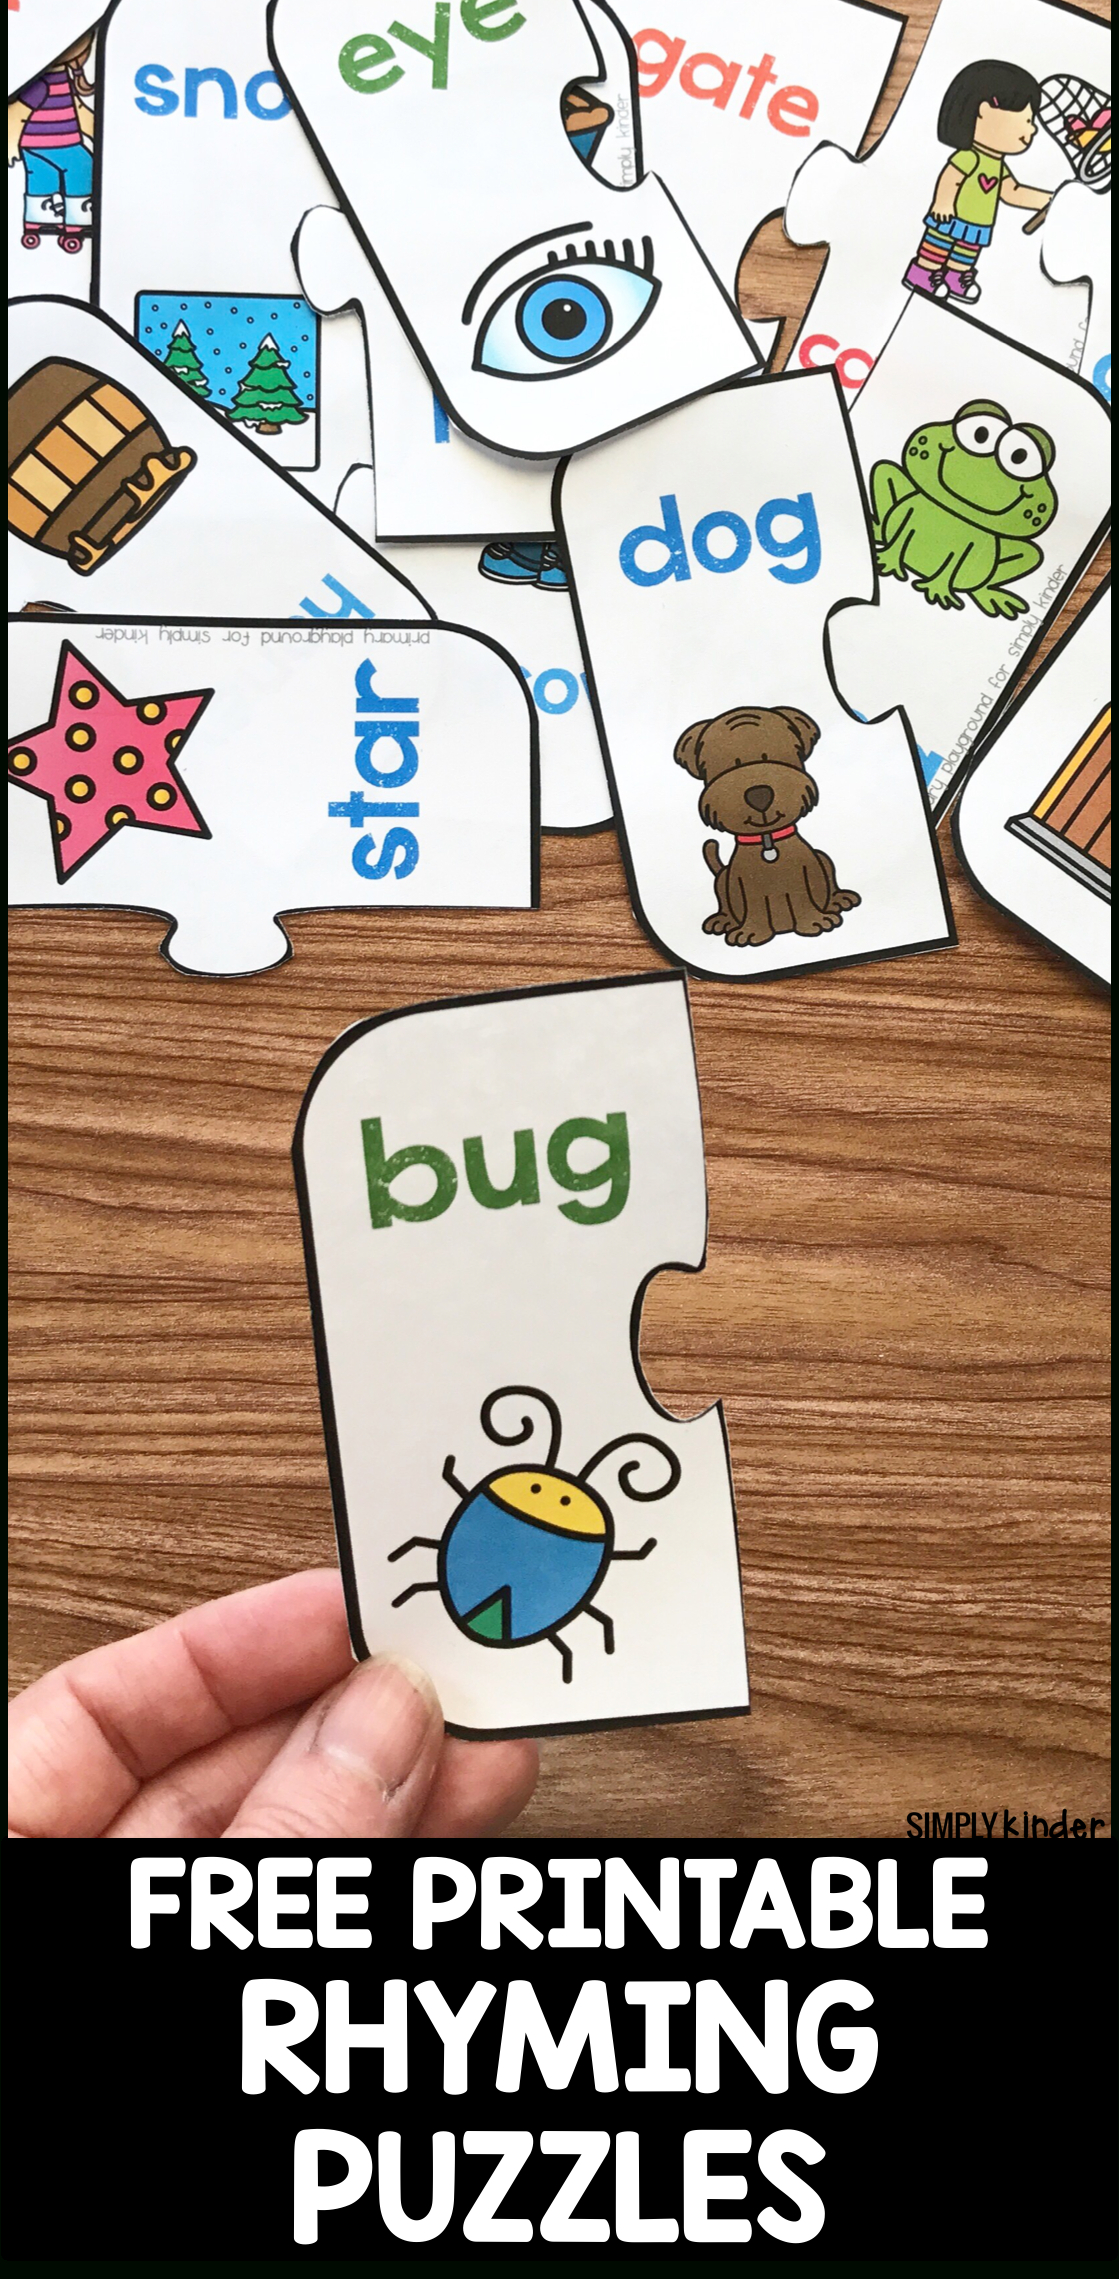 Free Printable Rhyming Puzzles - Simply Kinder - Printable Puzzles Kindergarten